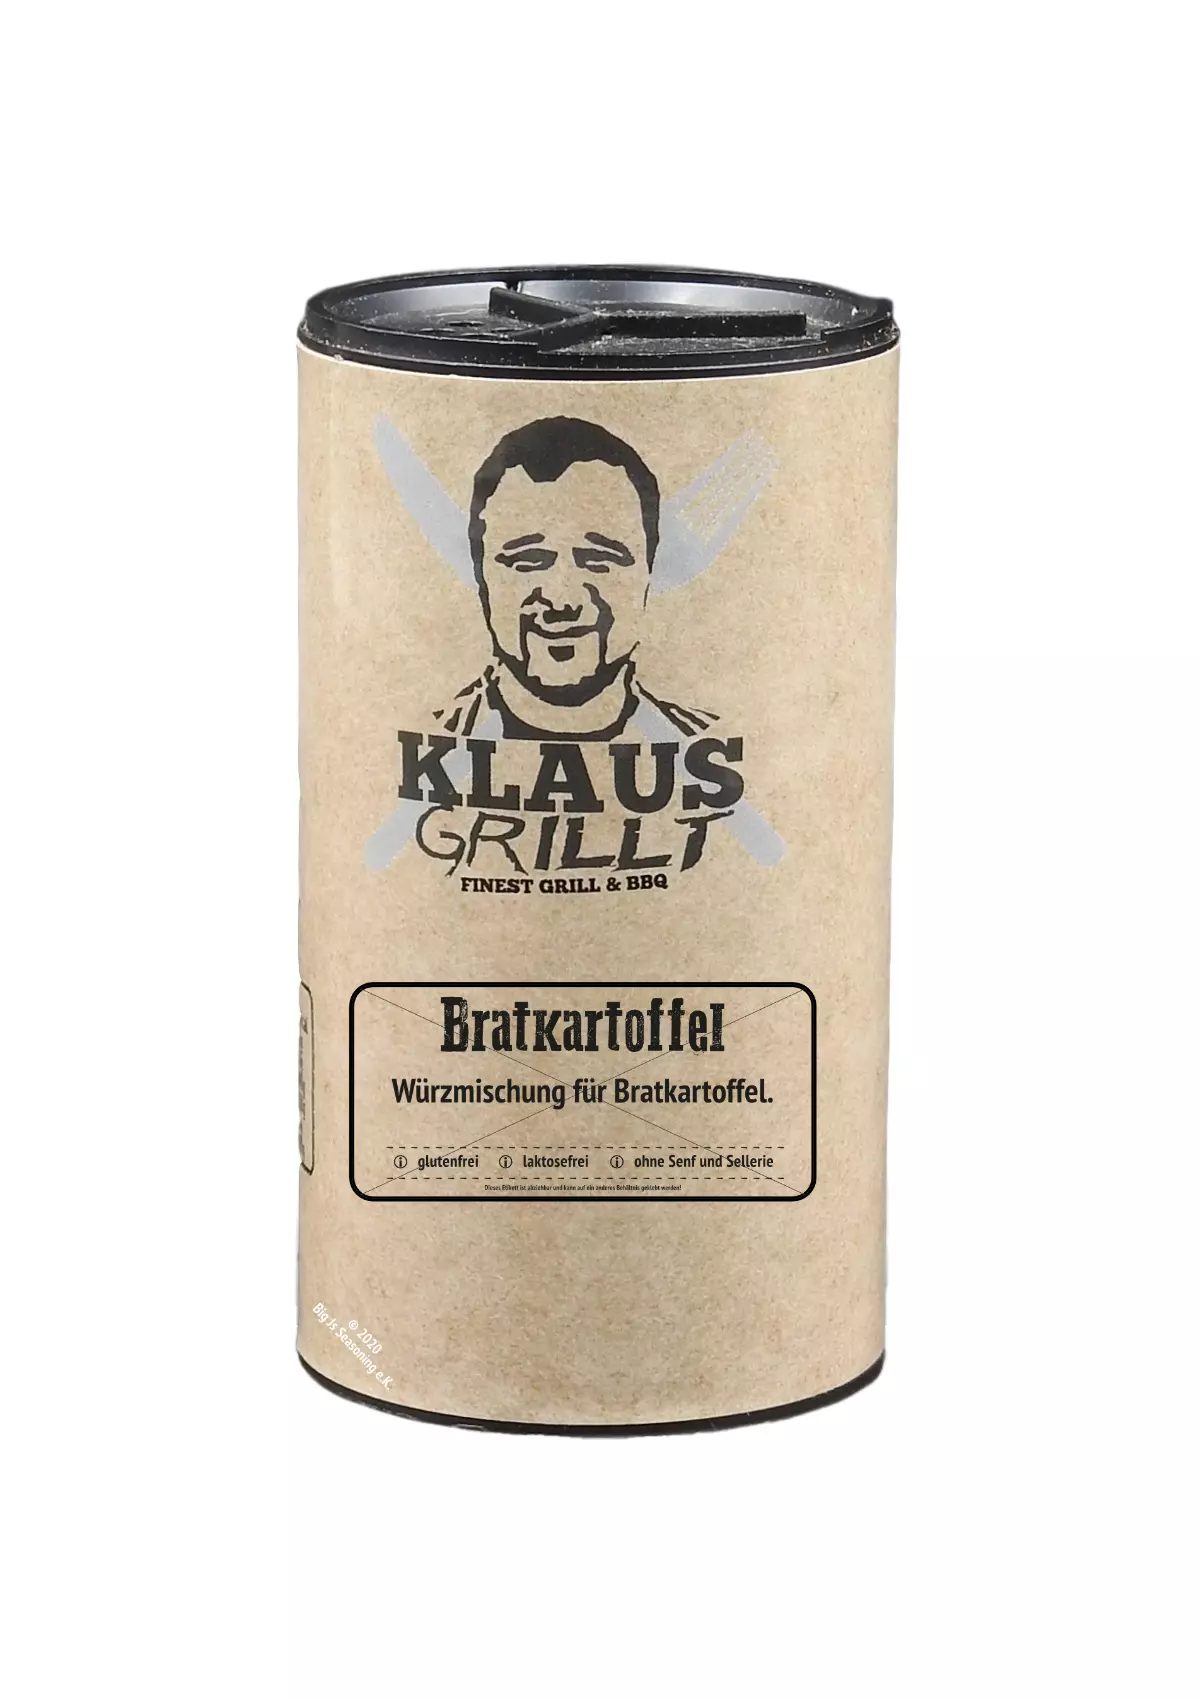 Klaus grillt, Bratkartoffel Würzer, 120g Streuer